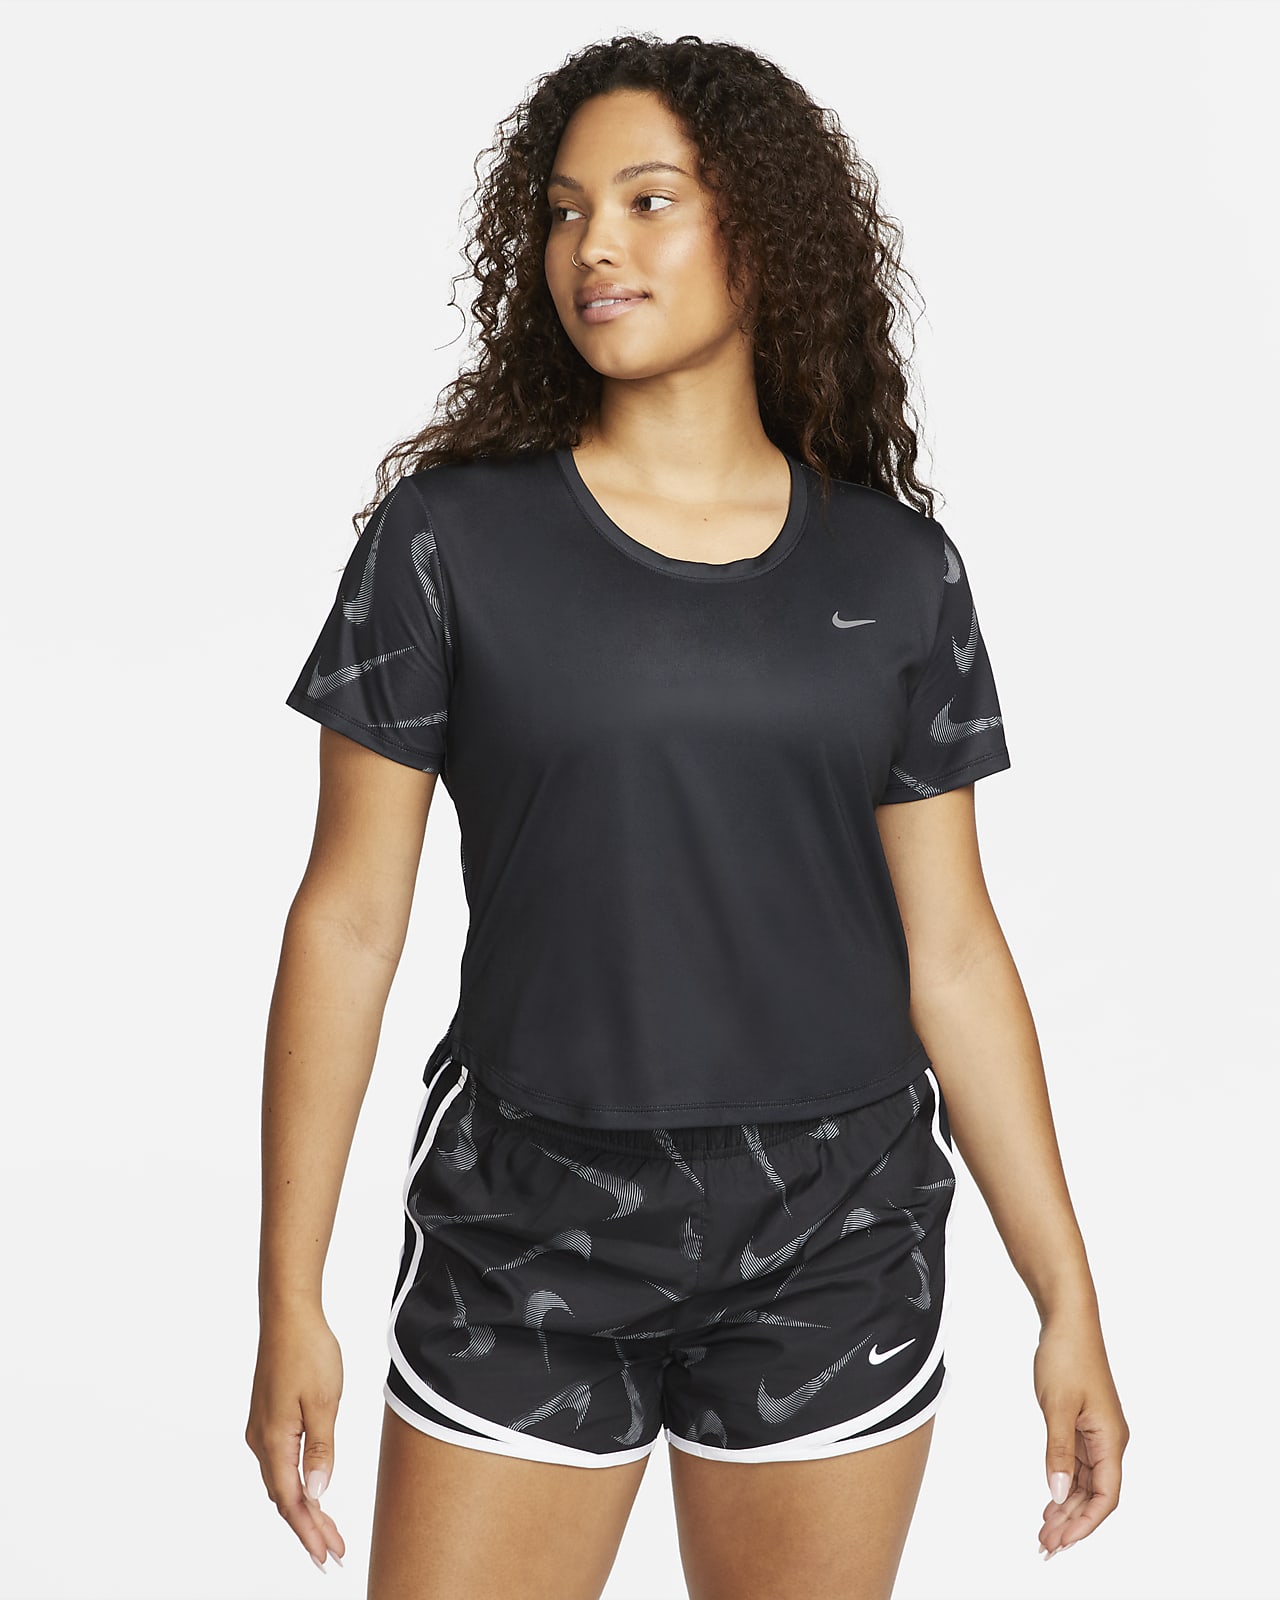 Nike Dri-FIT Swoosh hardlooptop met print en korte mouwen voor dames